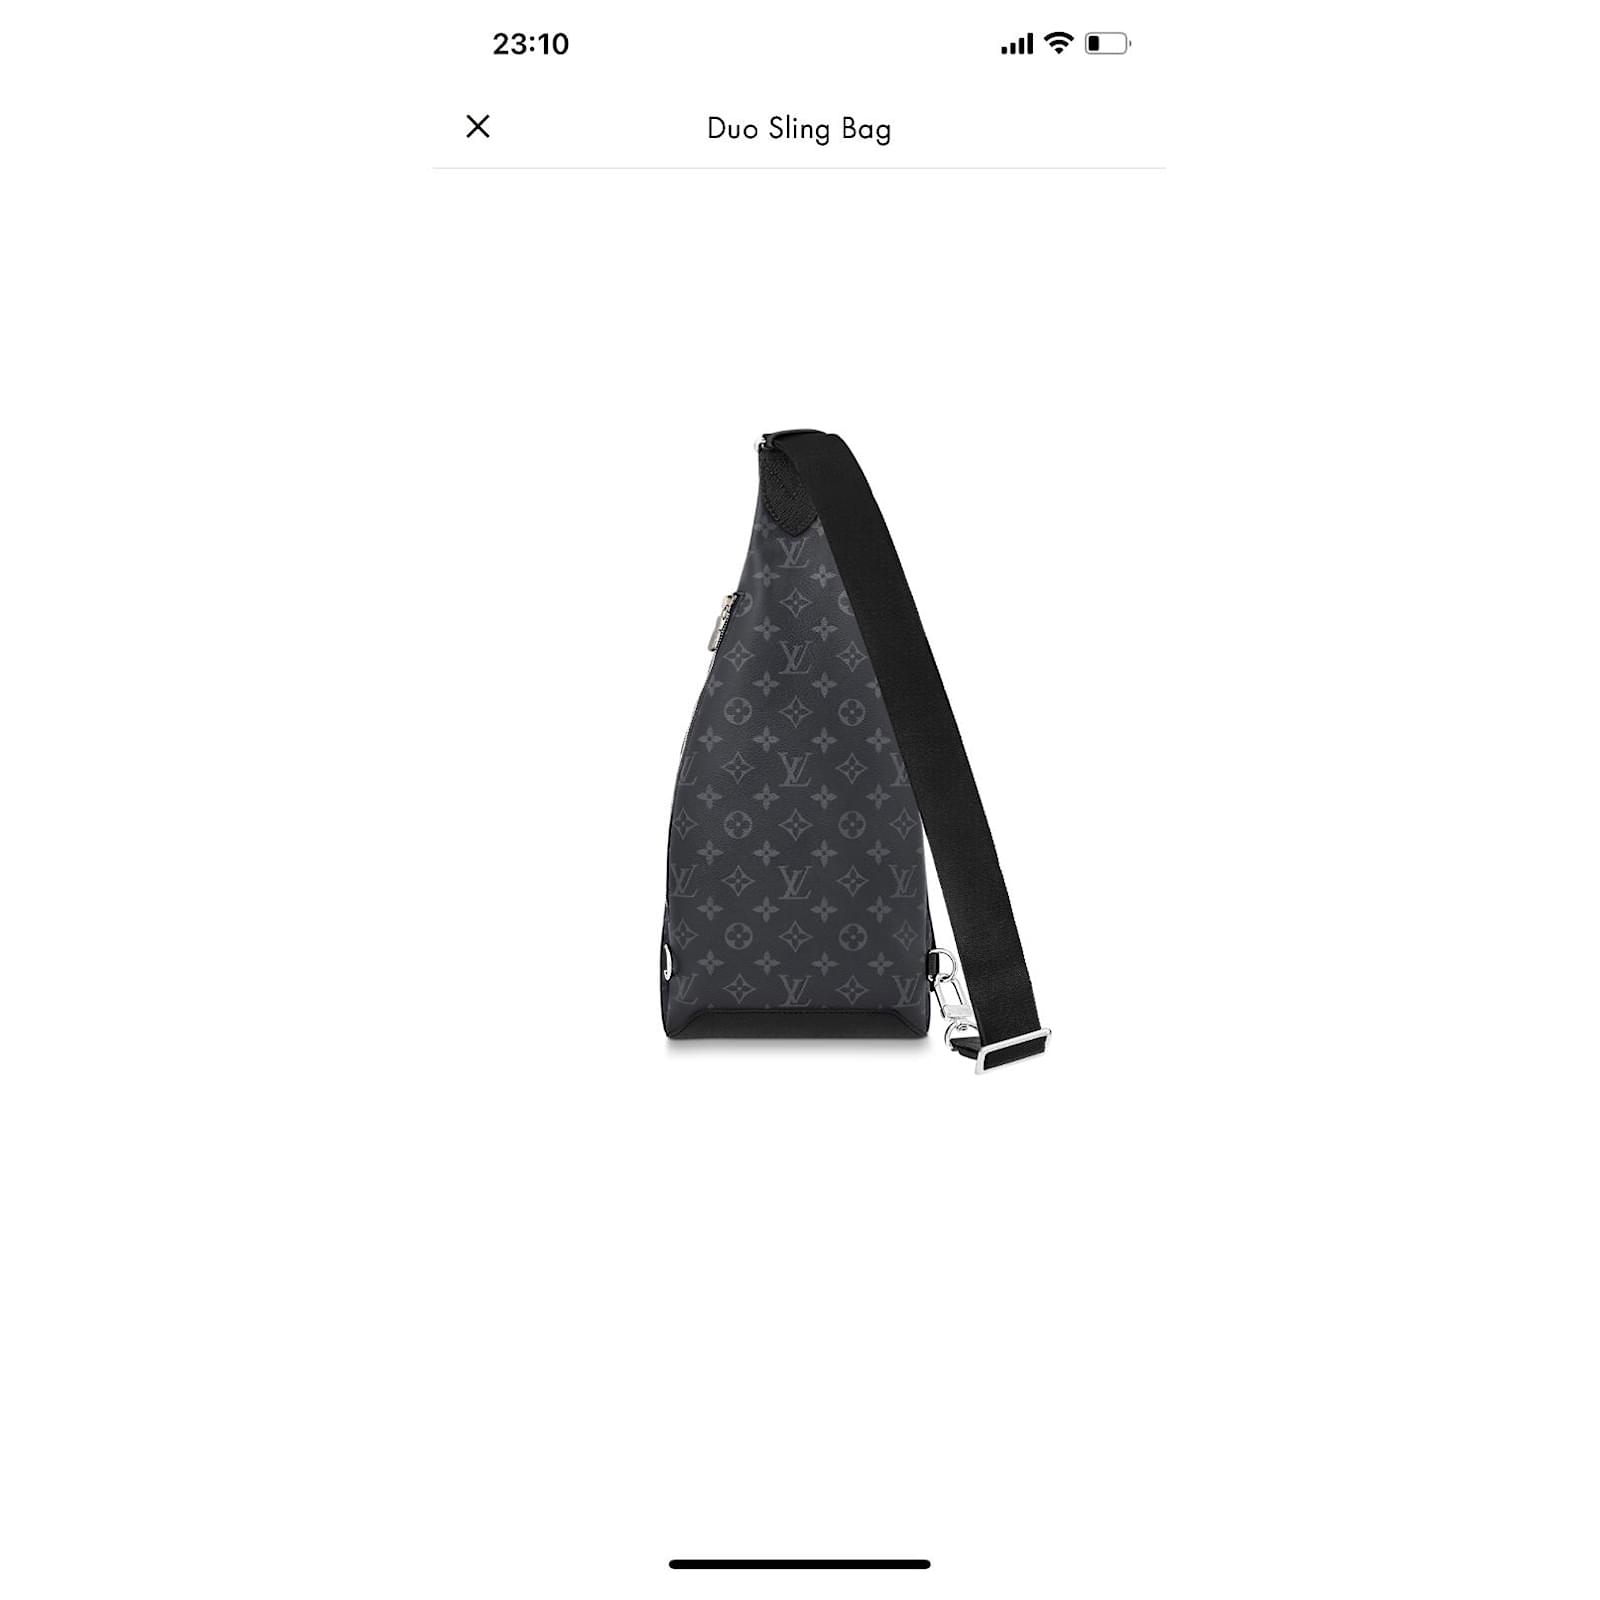 Louis Vuitton Duo Slingbag